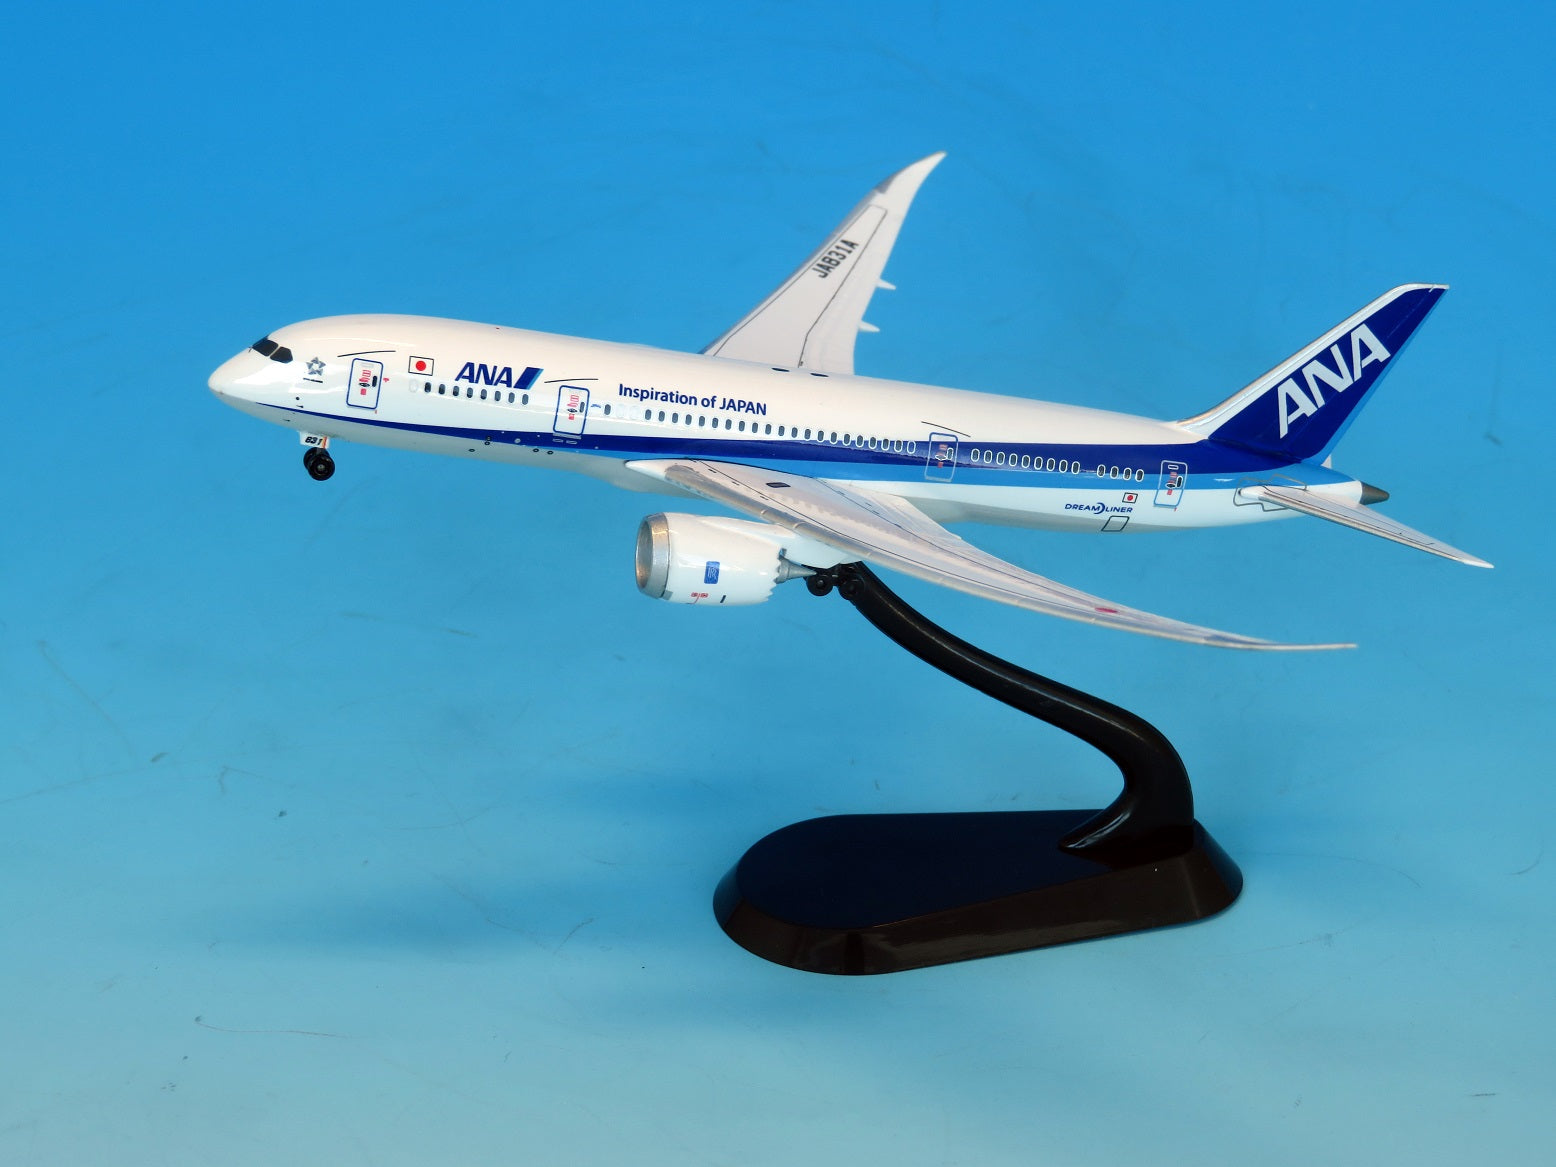 全日空商事 ANA 787-8 サバ機1:200 - 航空機